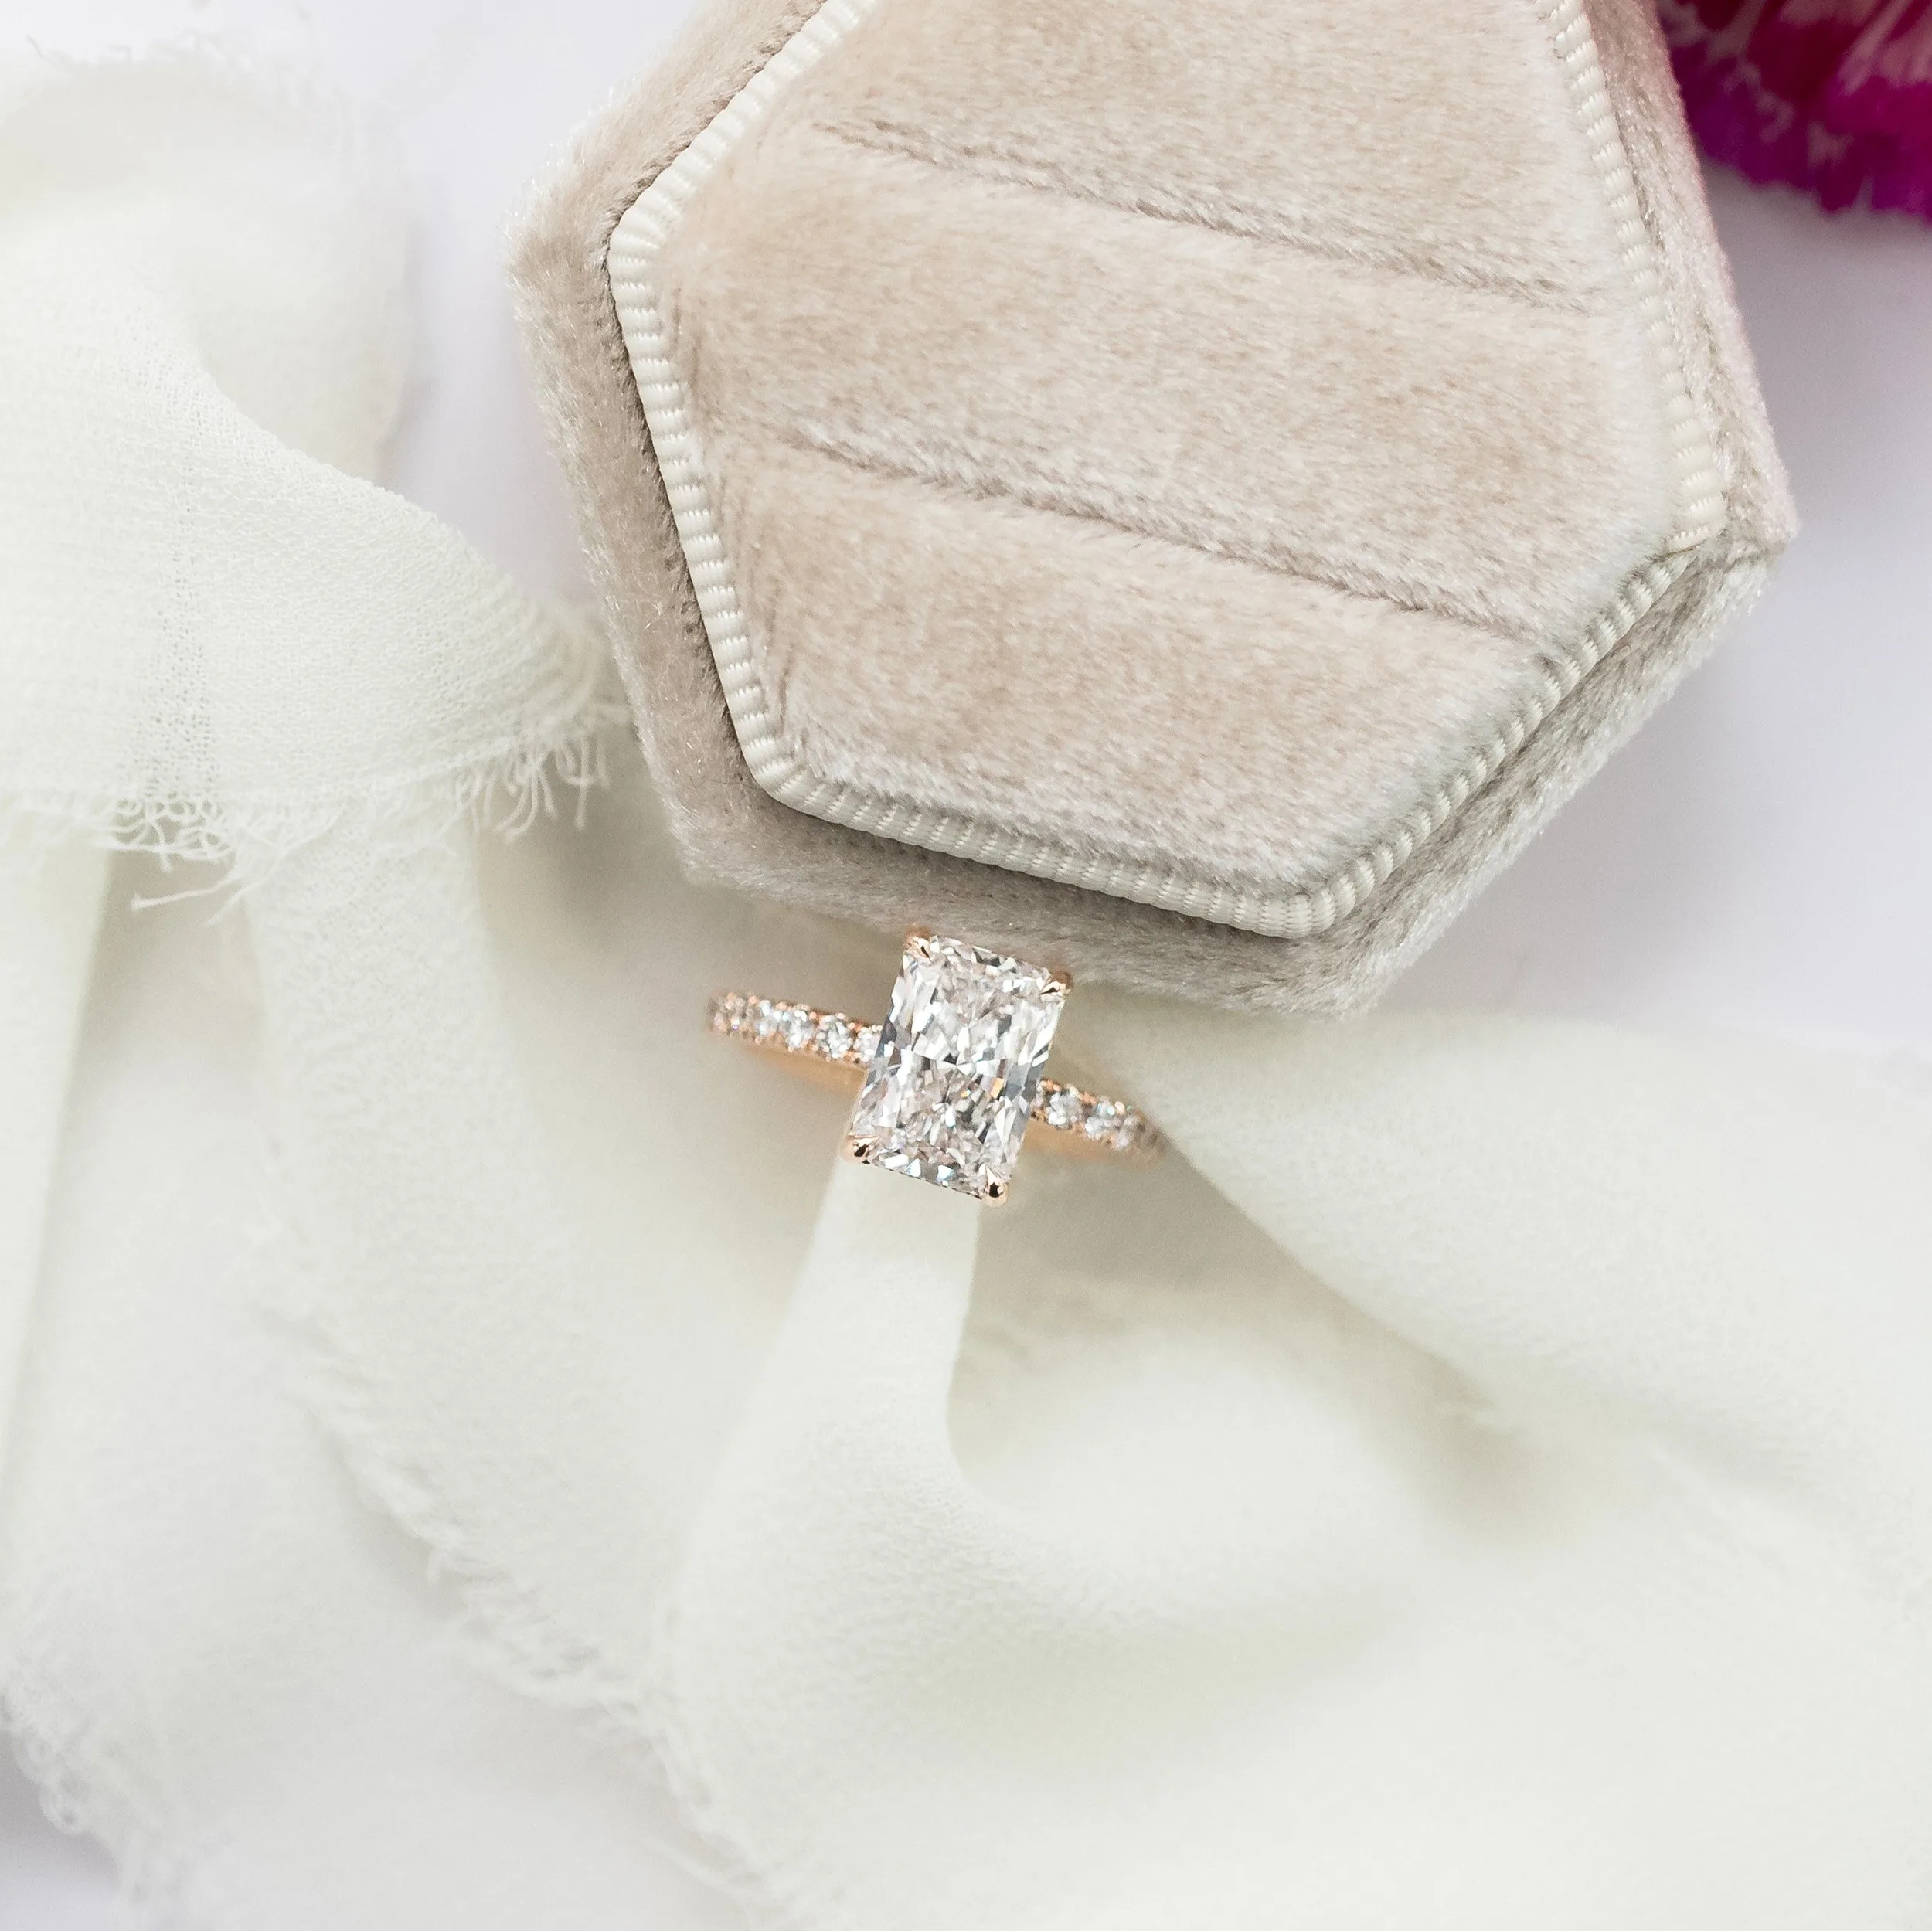 14k rose gold 2ct radiant cut pavé lab diamond engagement ring with hidden halo ada diamonds design ad 229 macro